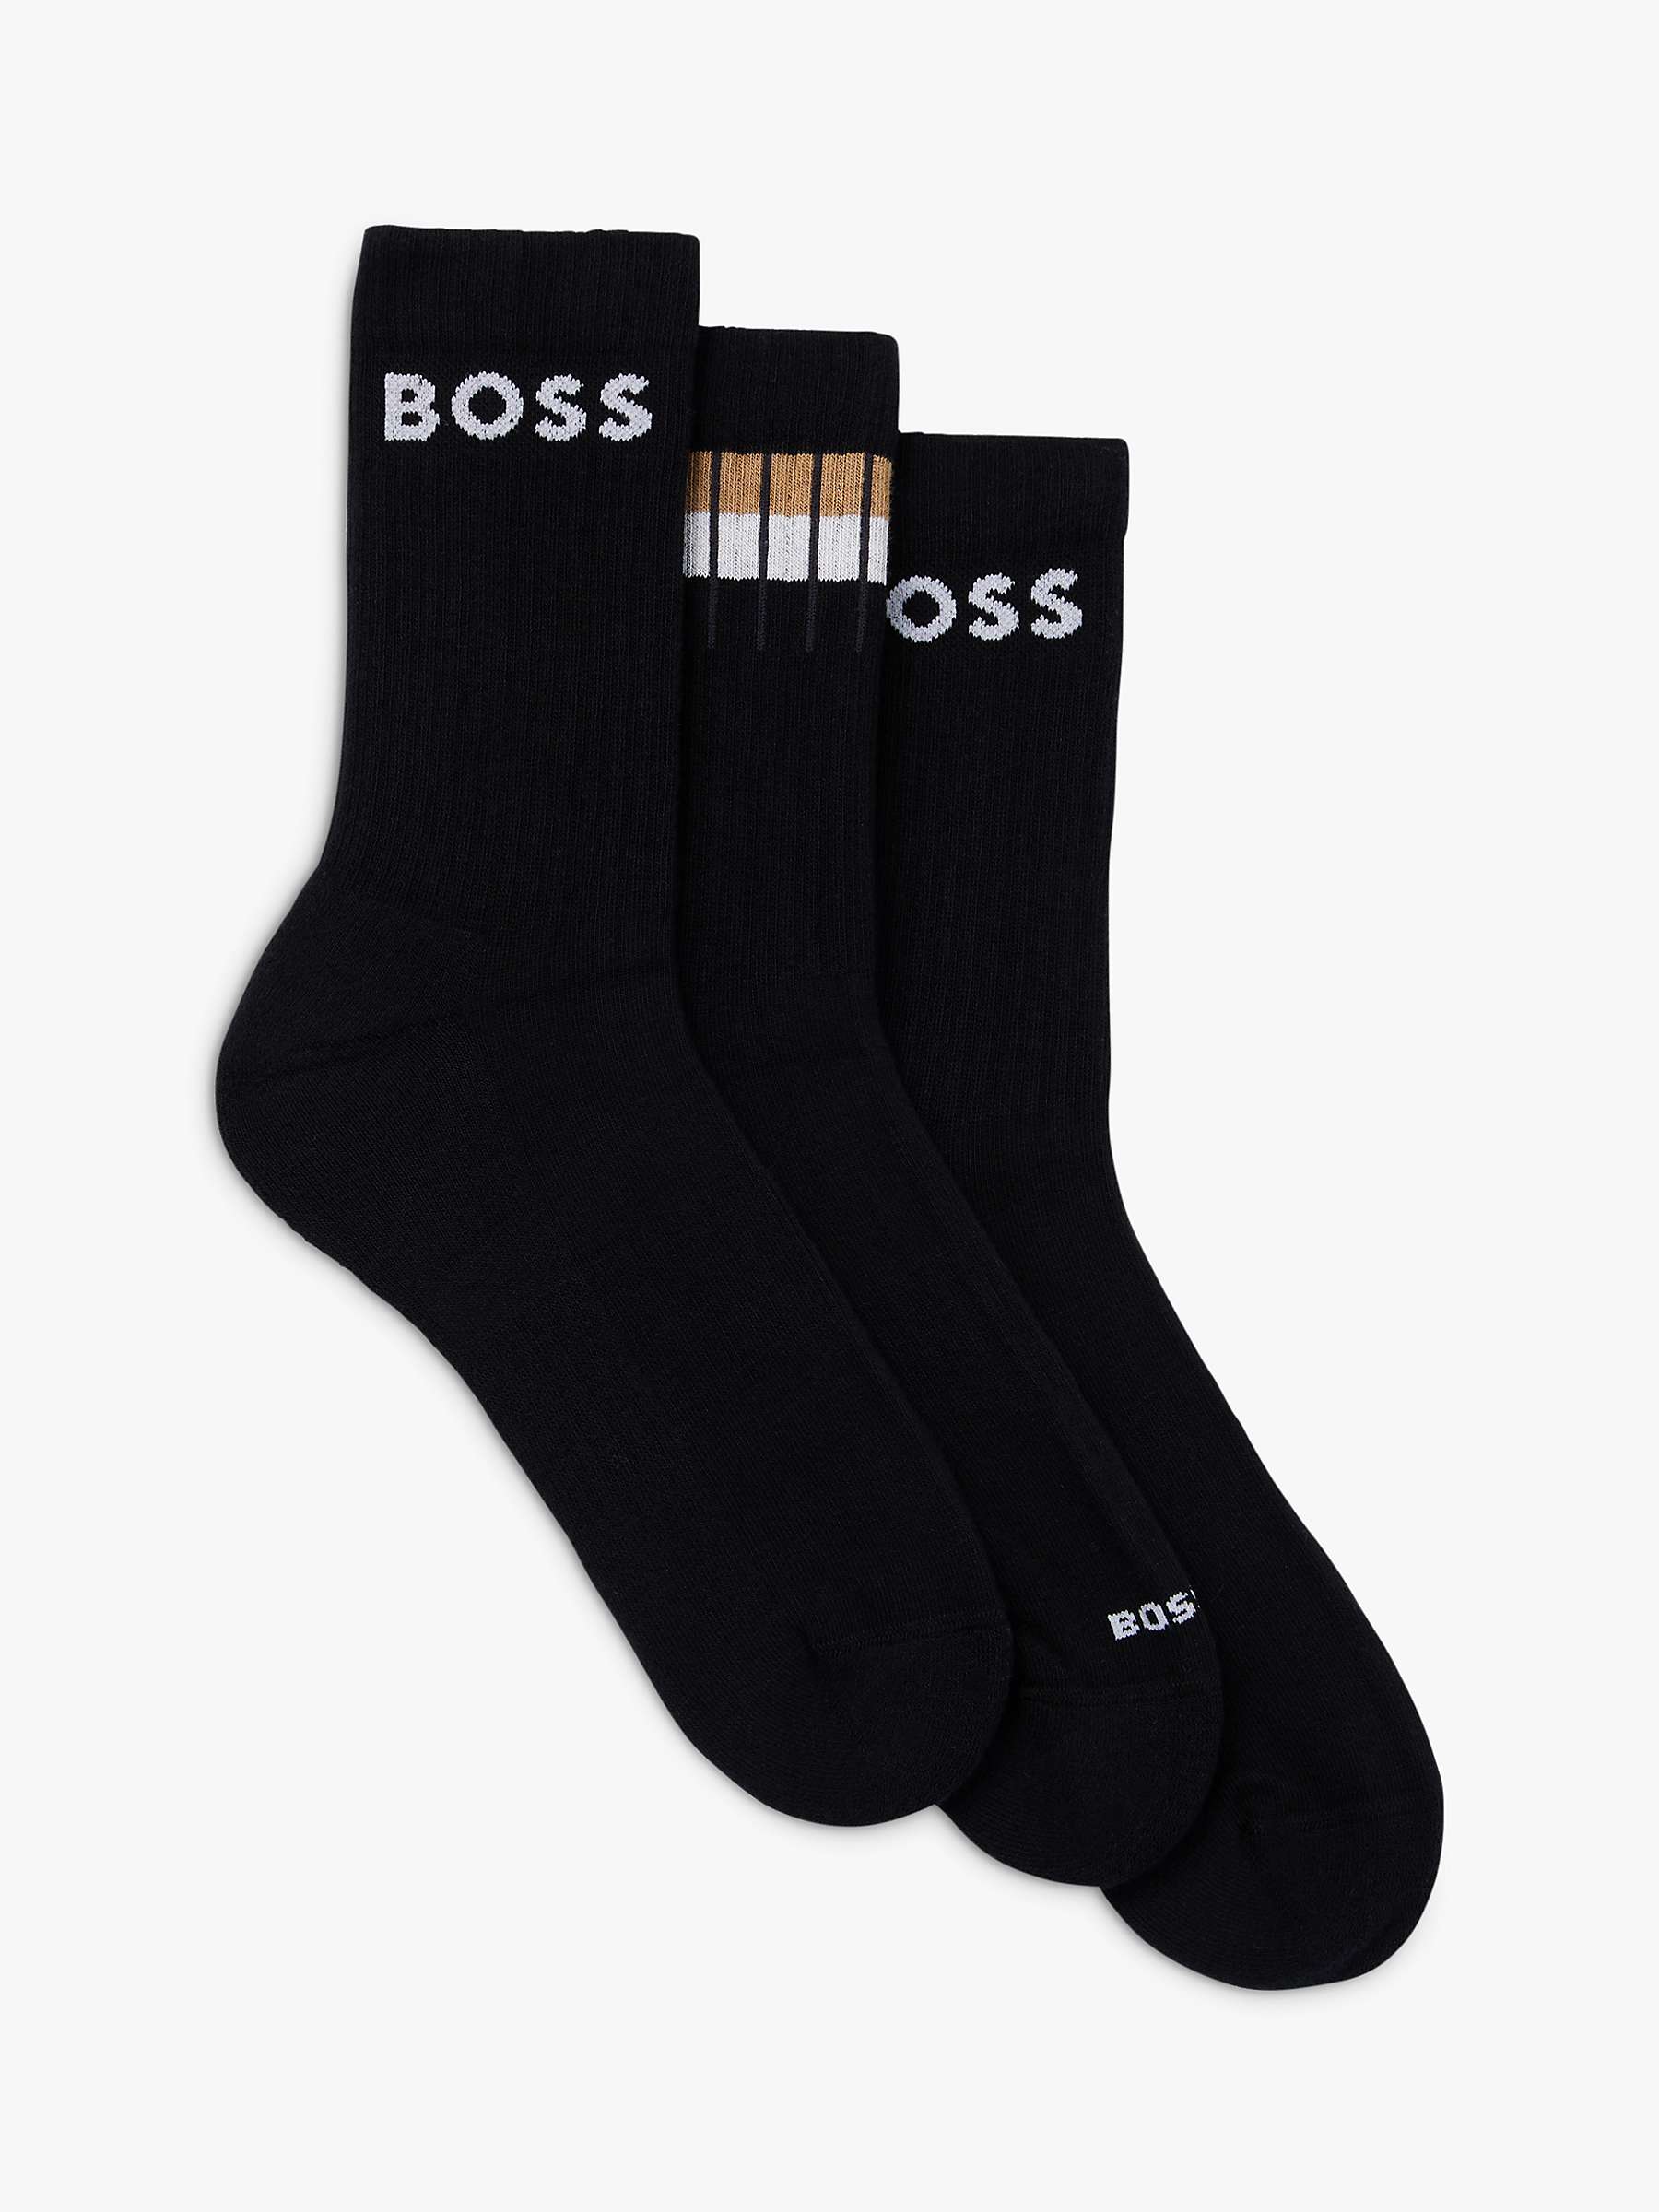 Buy BOSS Sportive Stripe Socks, Pack of 3 Online at johnlewis.com